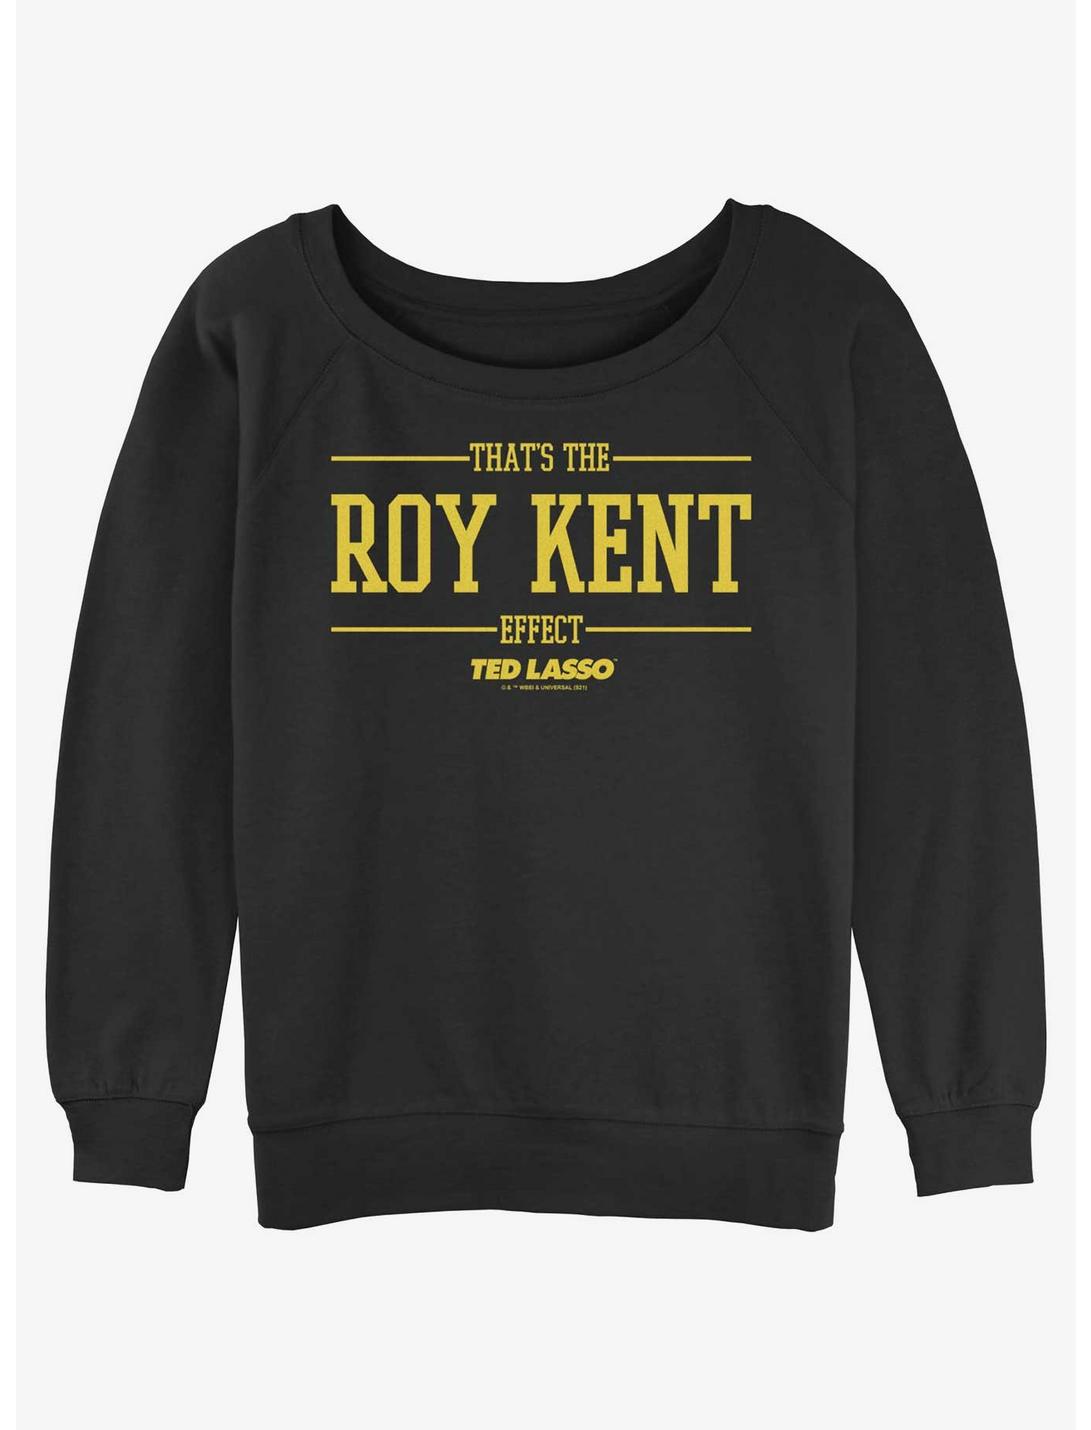 Ted Lasso The Roy Kent Effect Girls Slouchy Sweatshirt, BLACK, hi-res